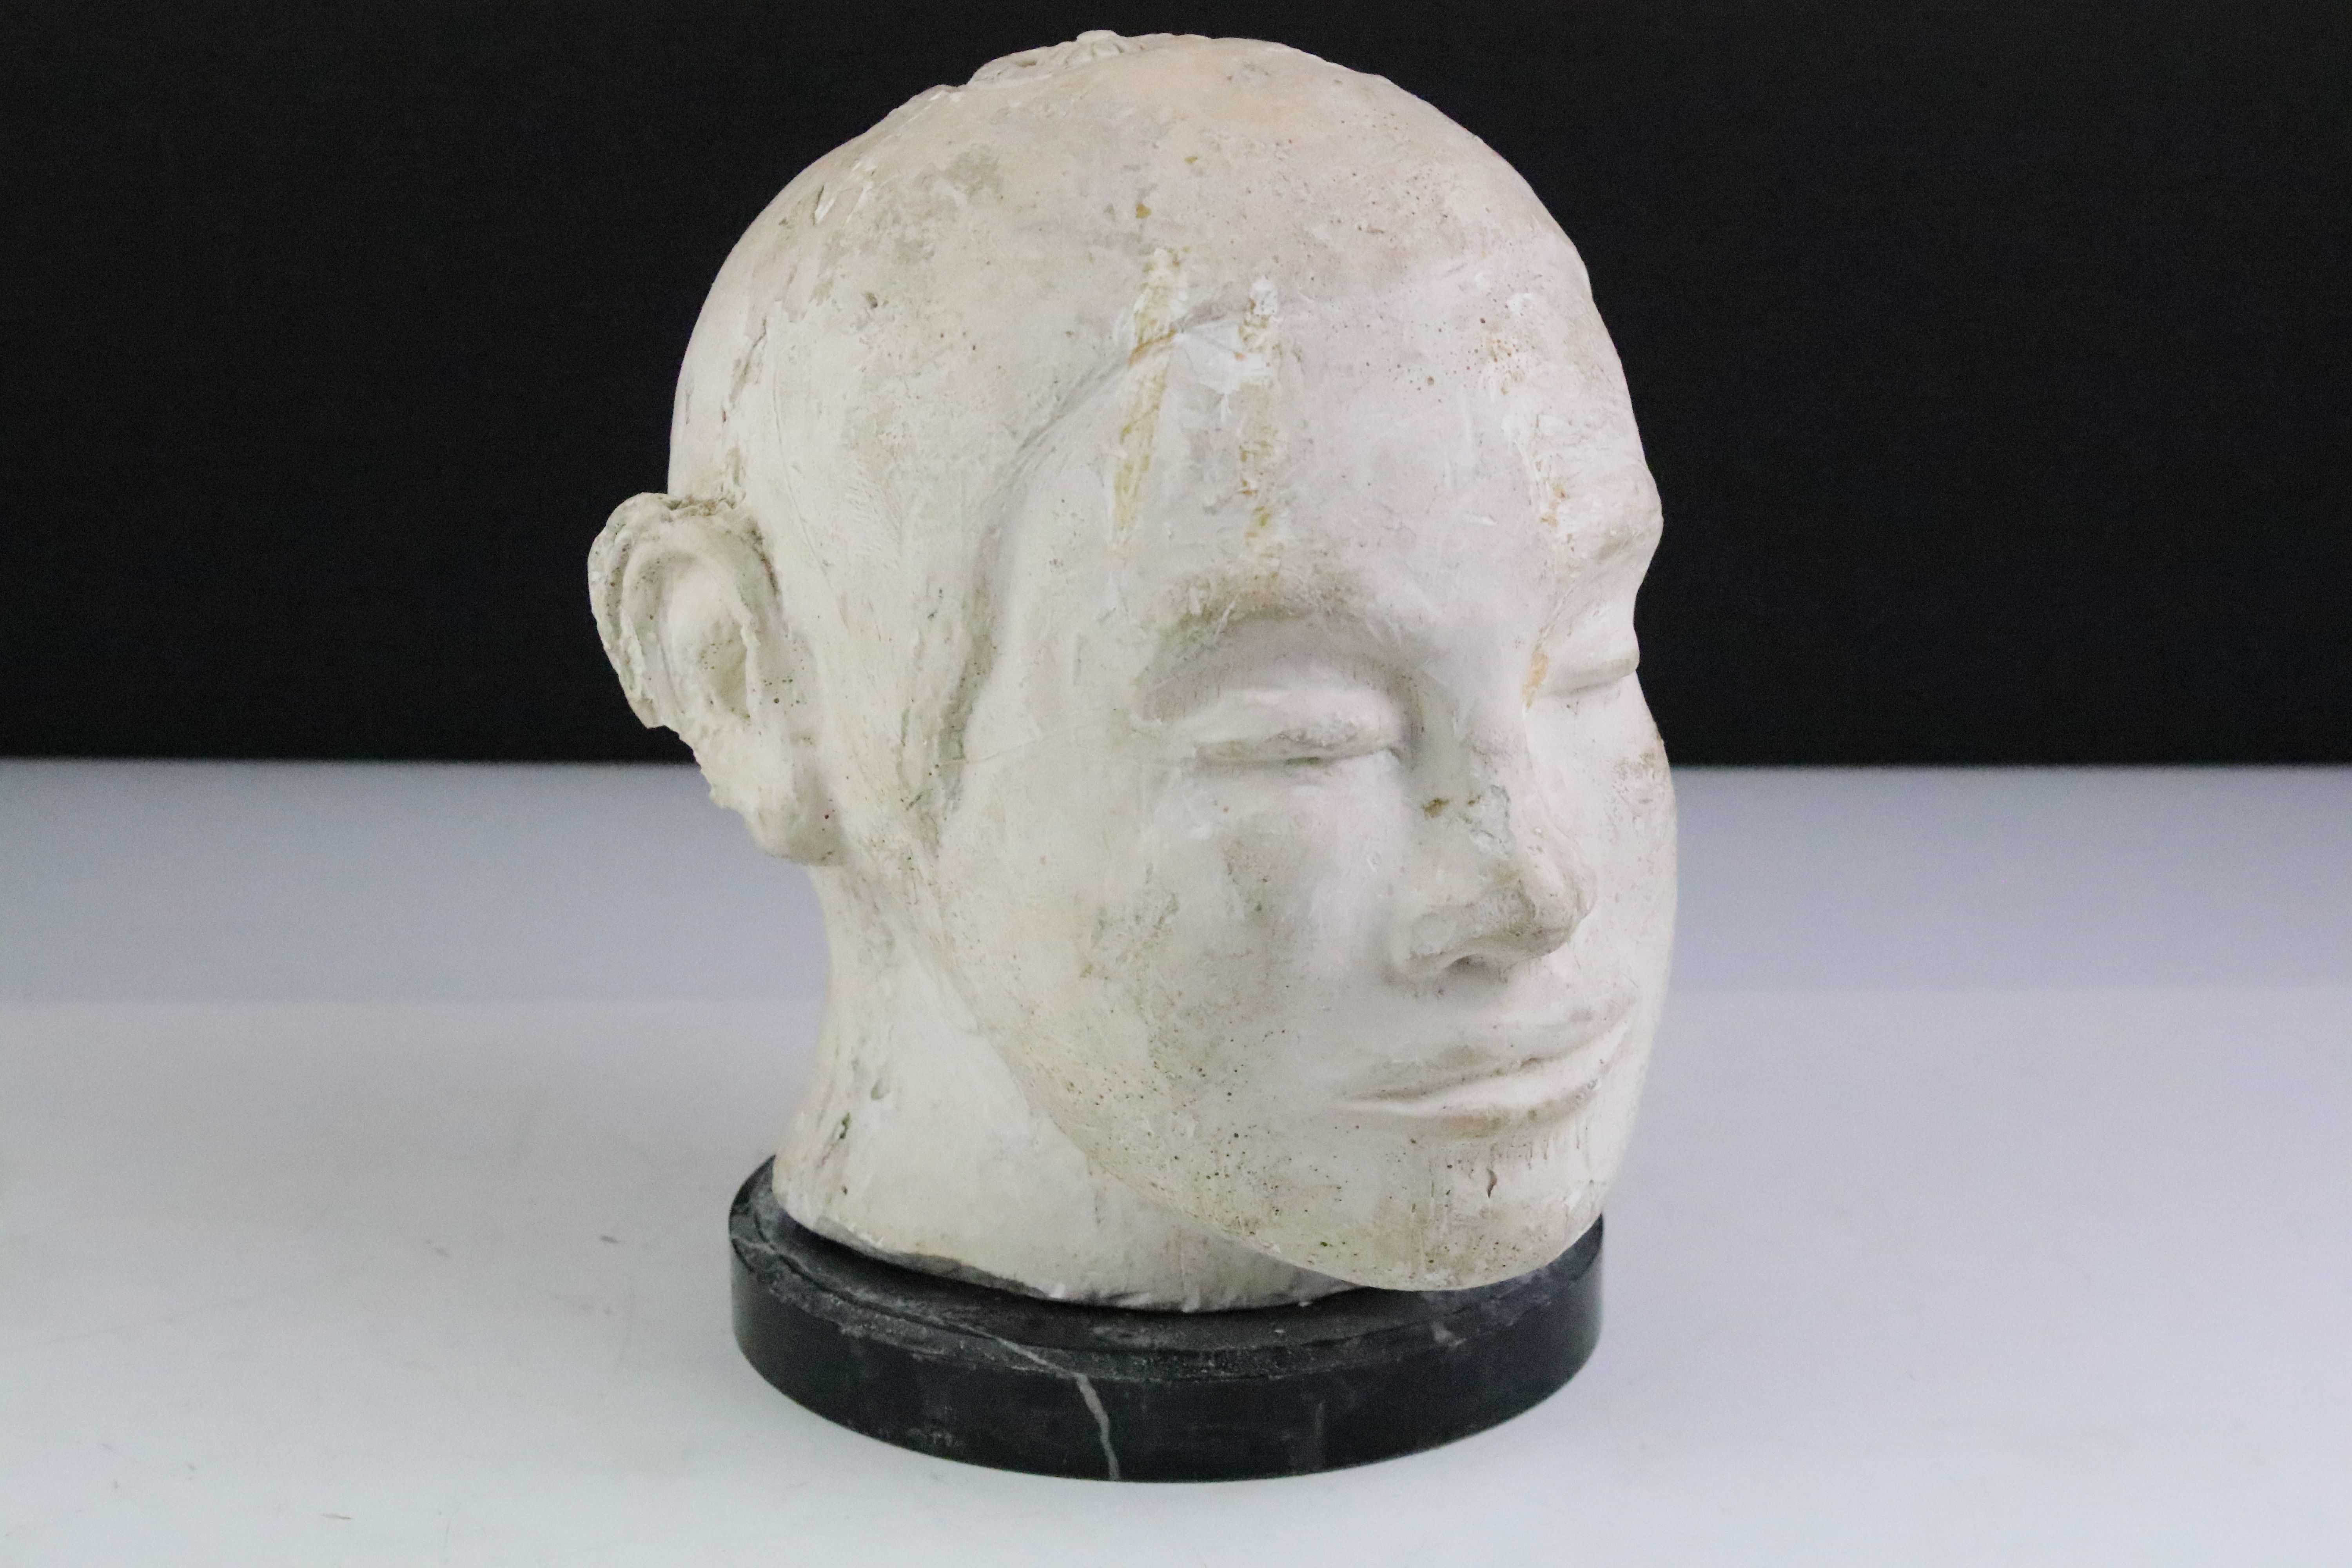 Vintage plaster head of a Eastern boy